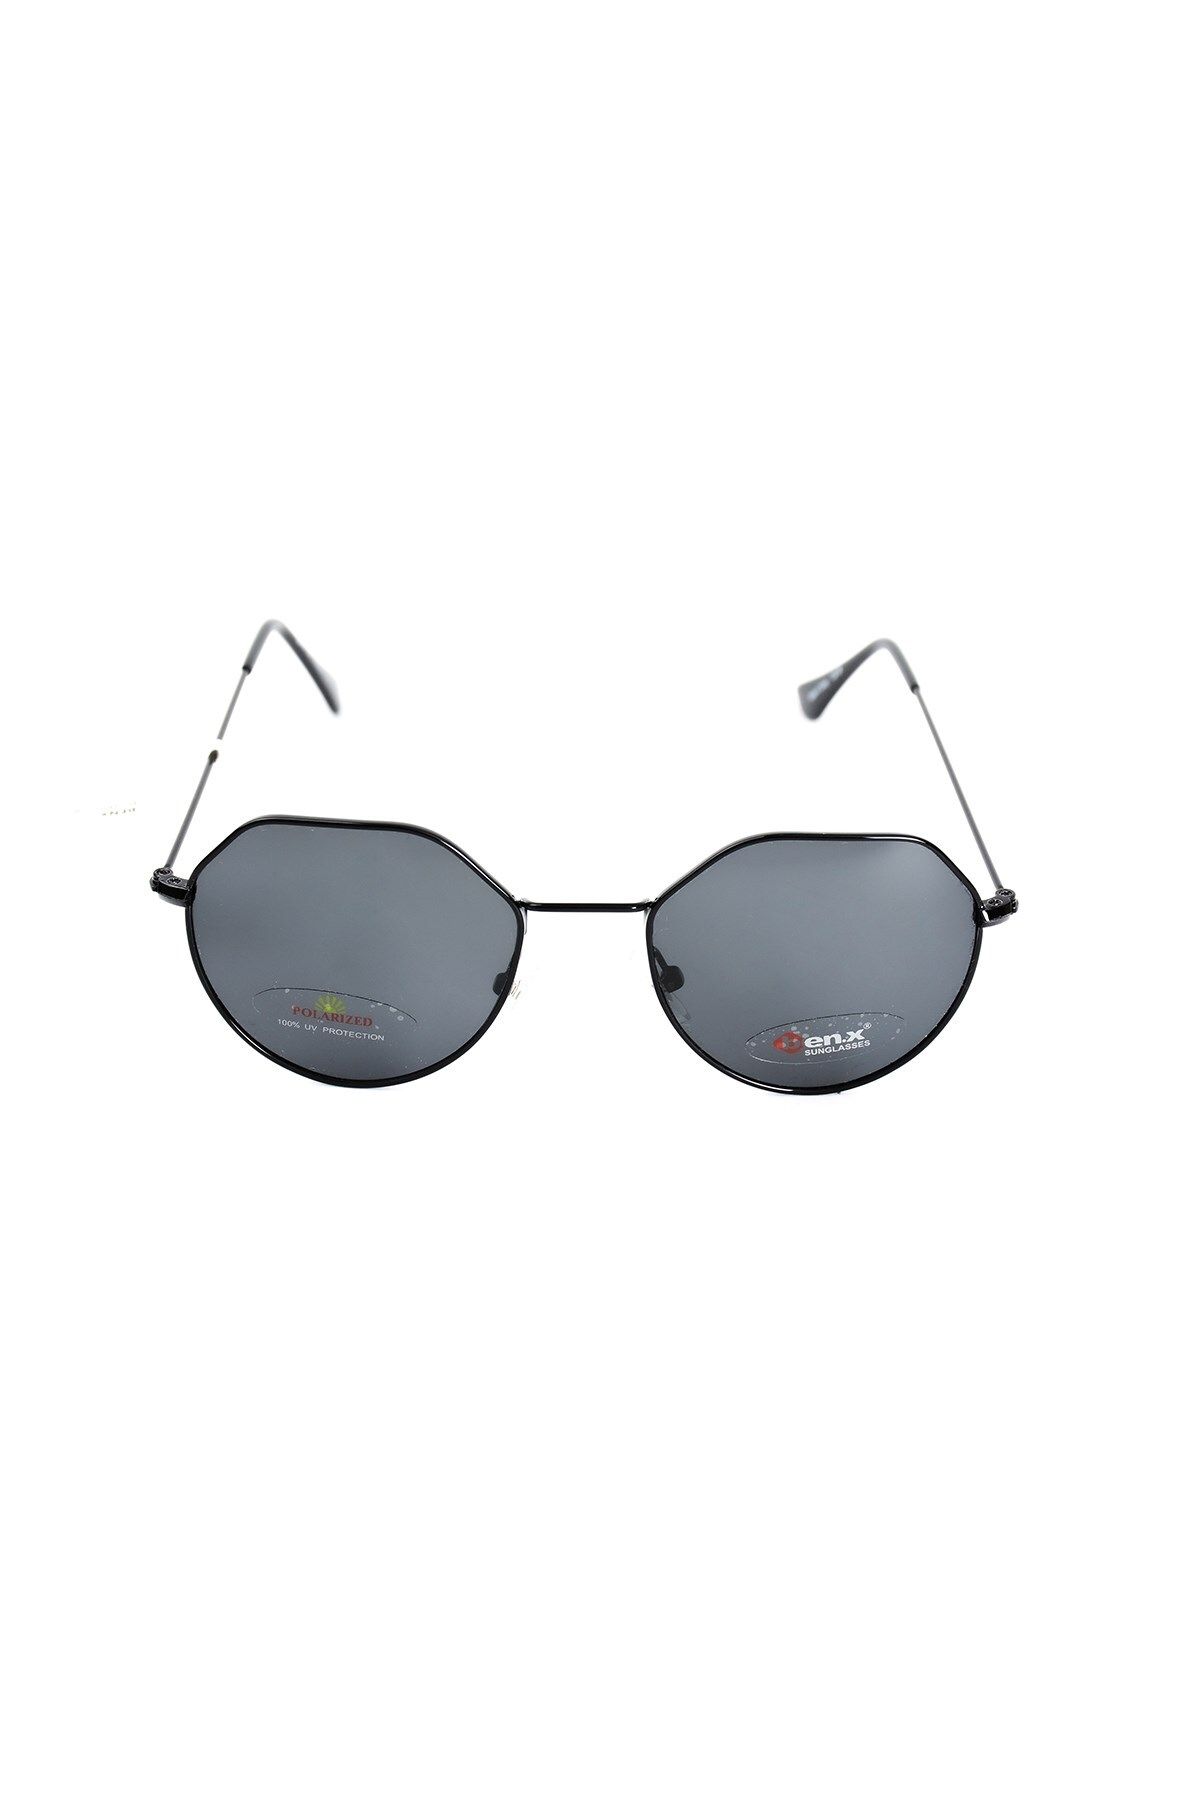 Benx Sunglasses Benx 8007 06